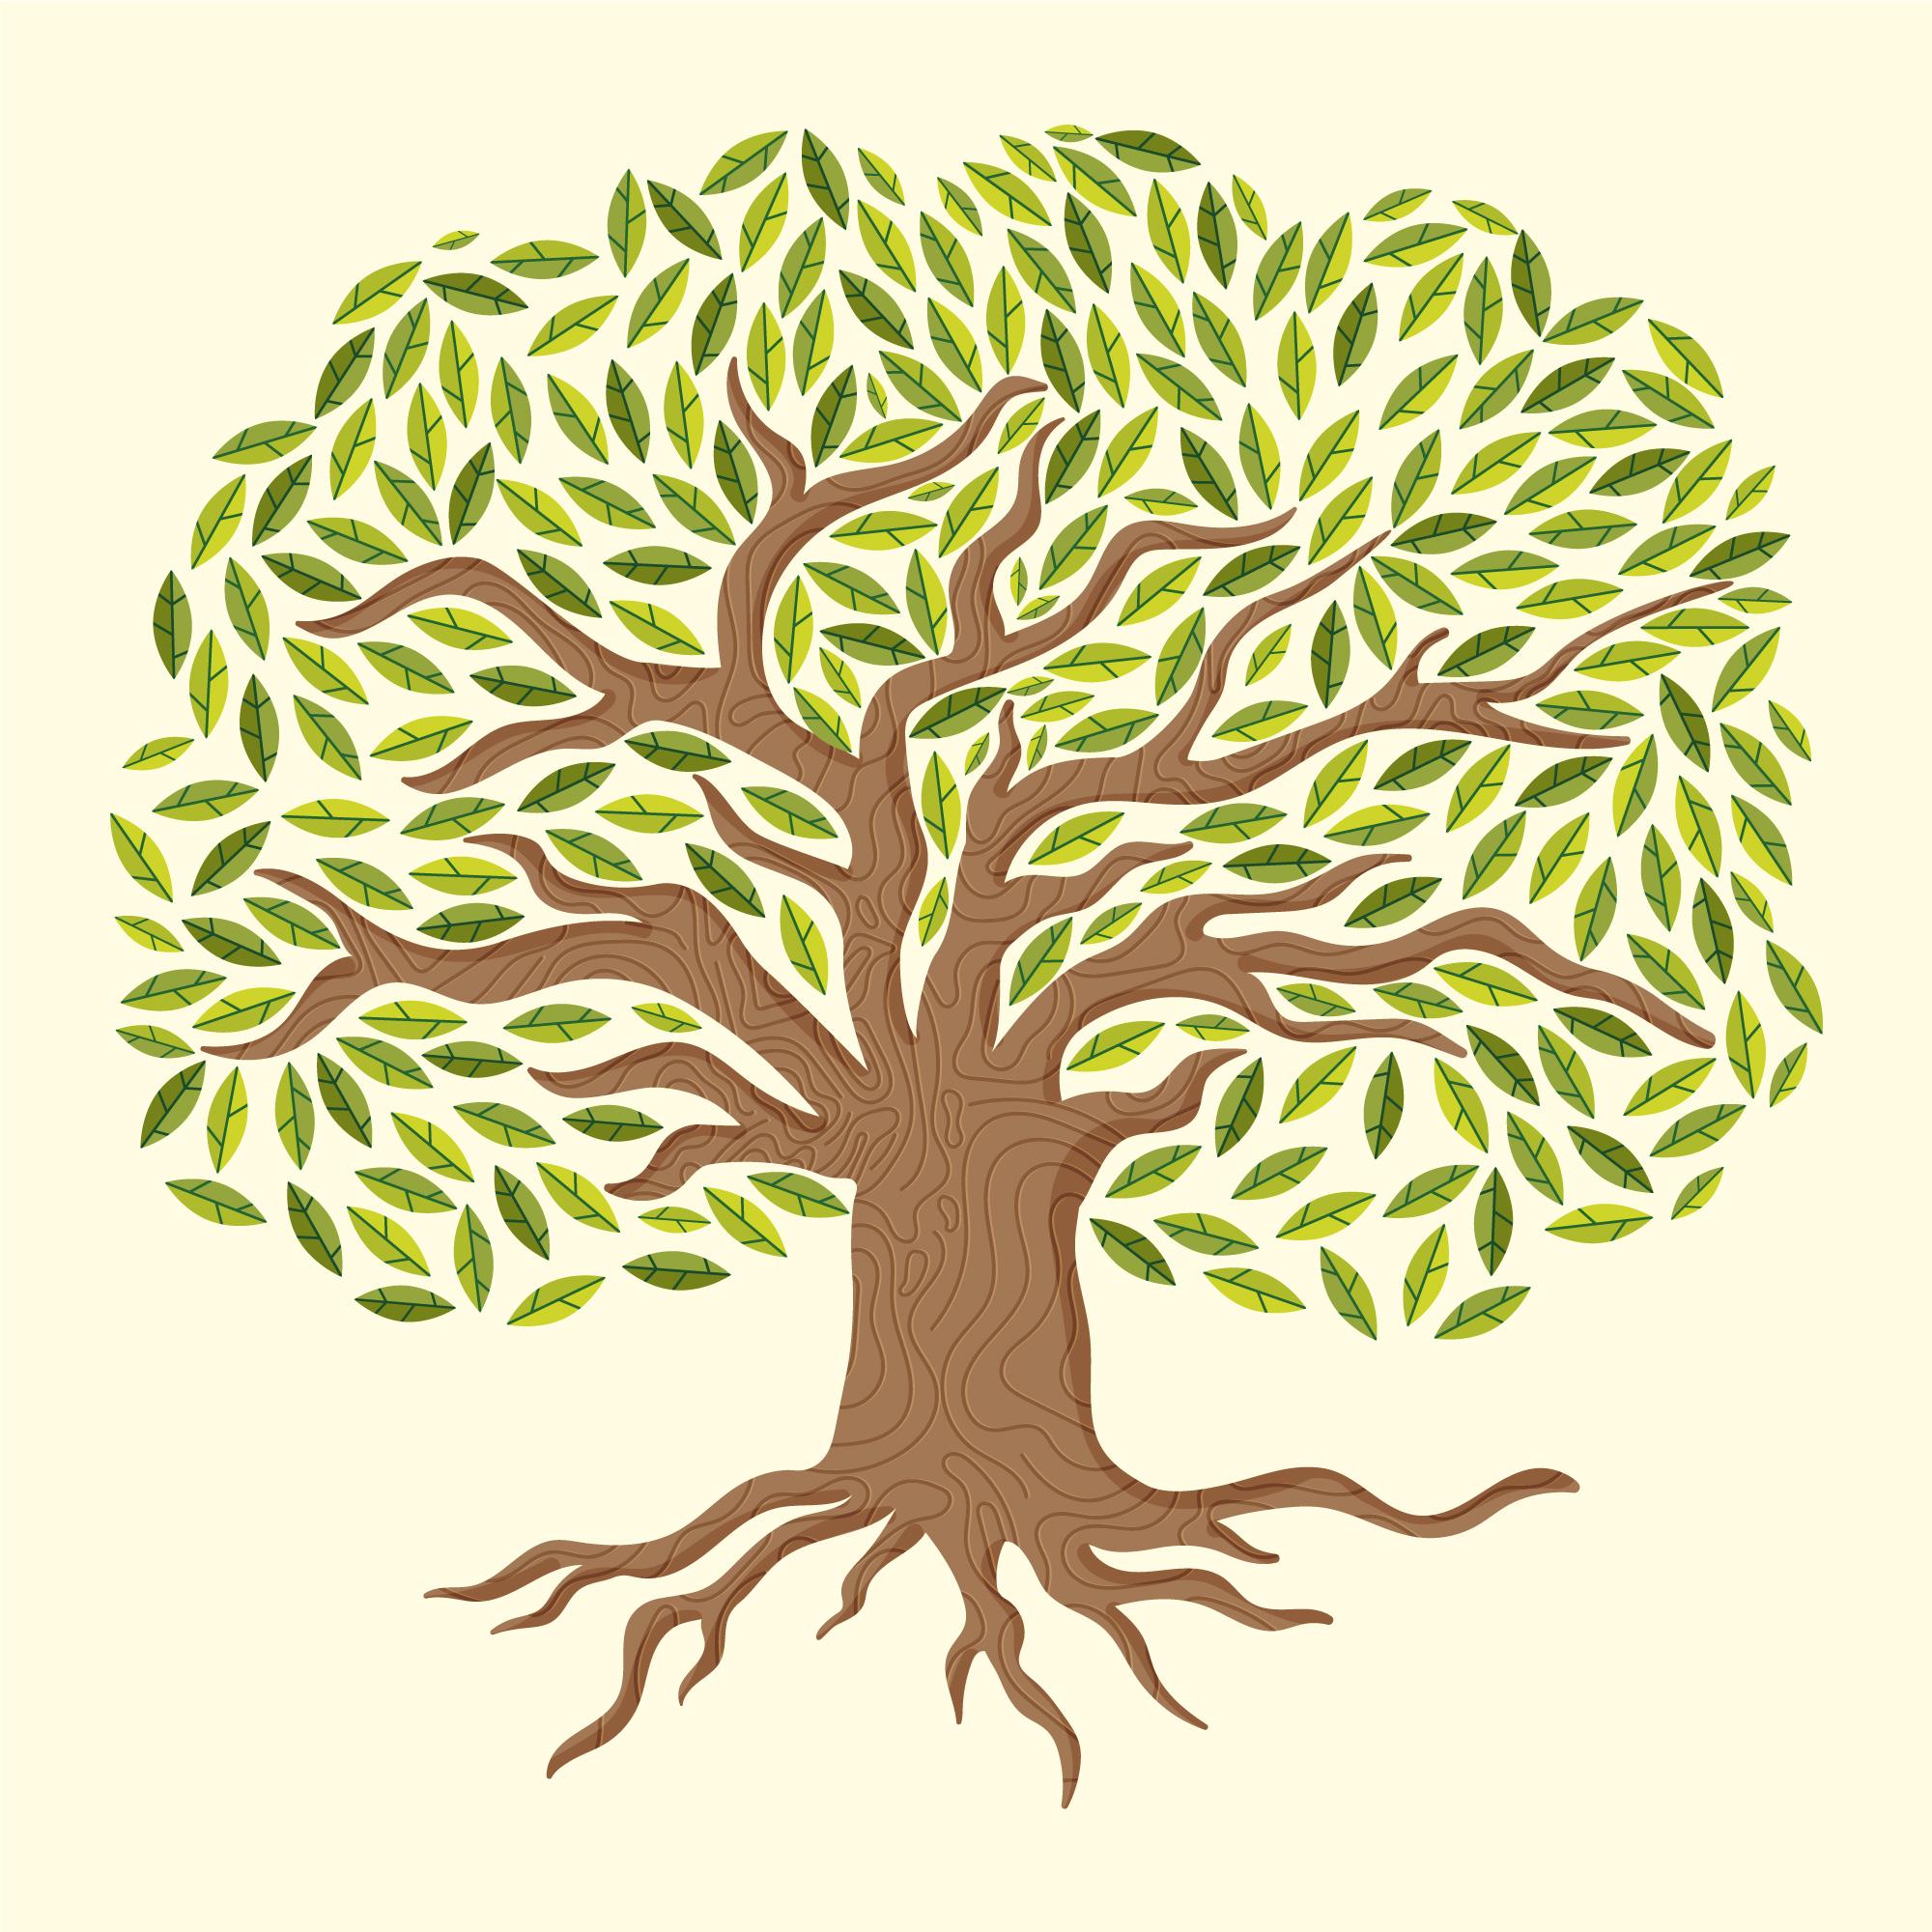 Tree of life symbolizing Rooftop's commitment to sustainability development goals. Source: Freepik